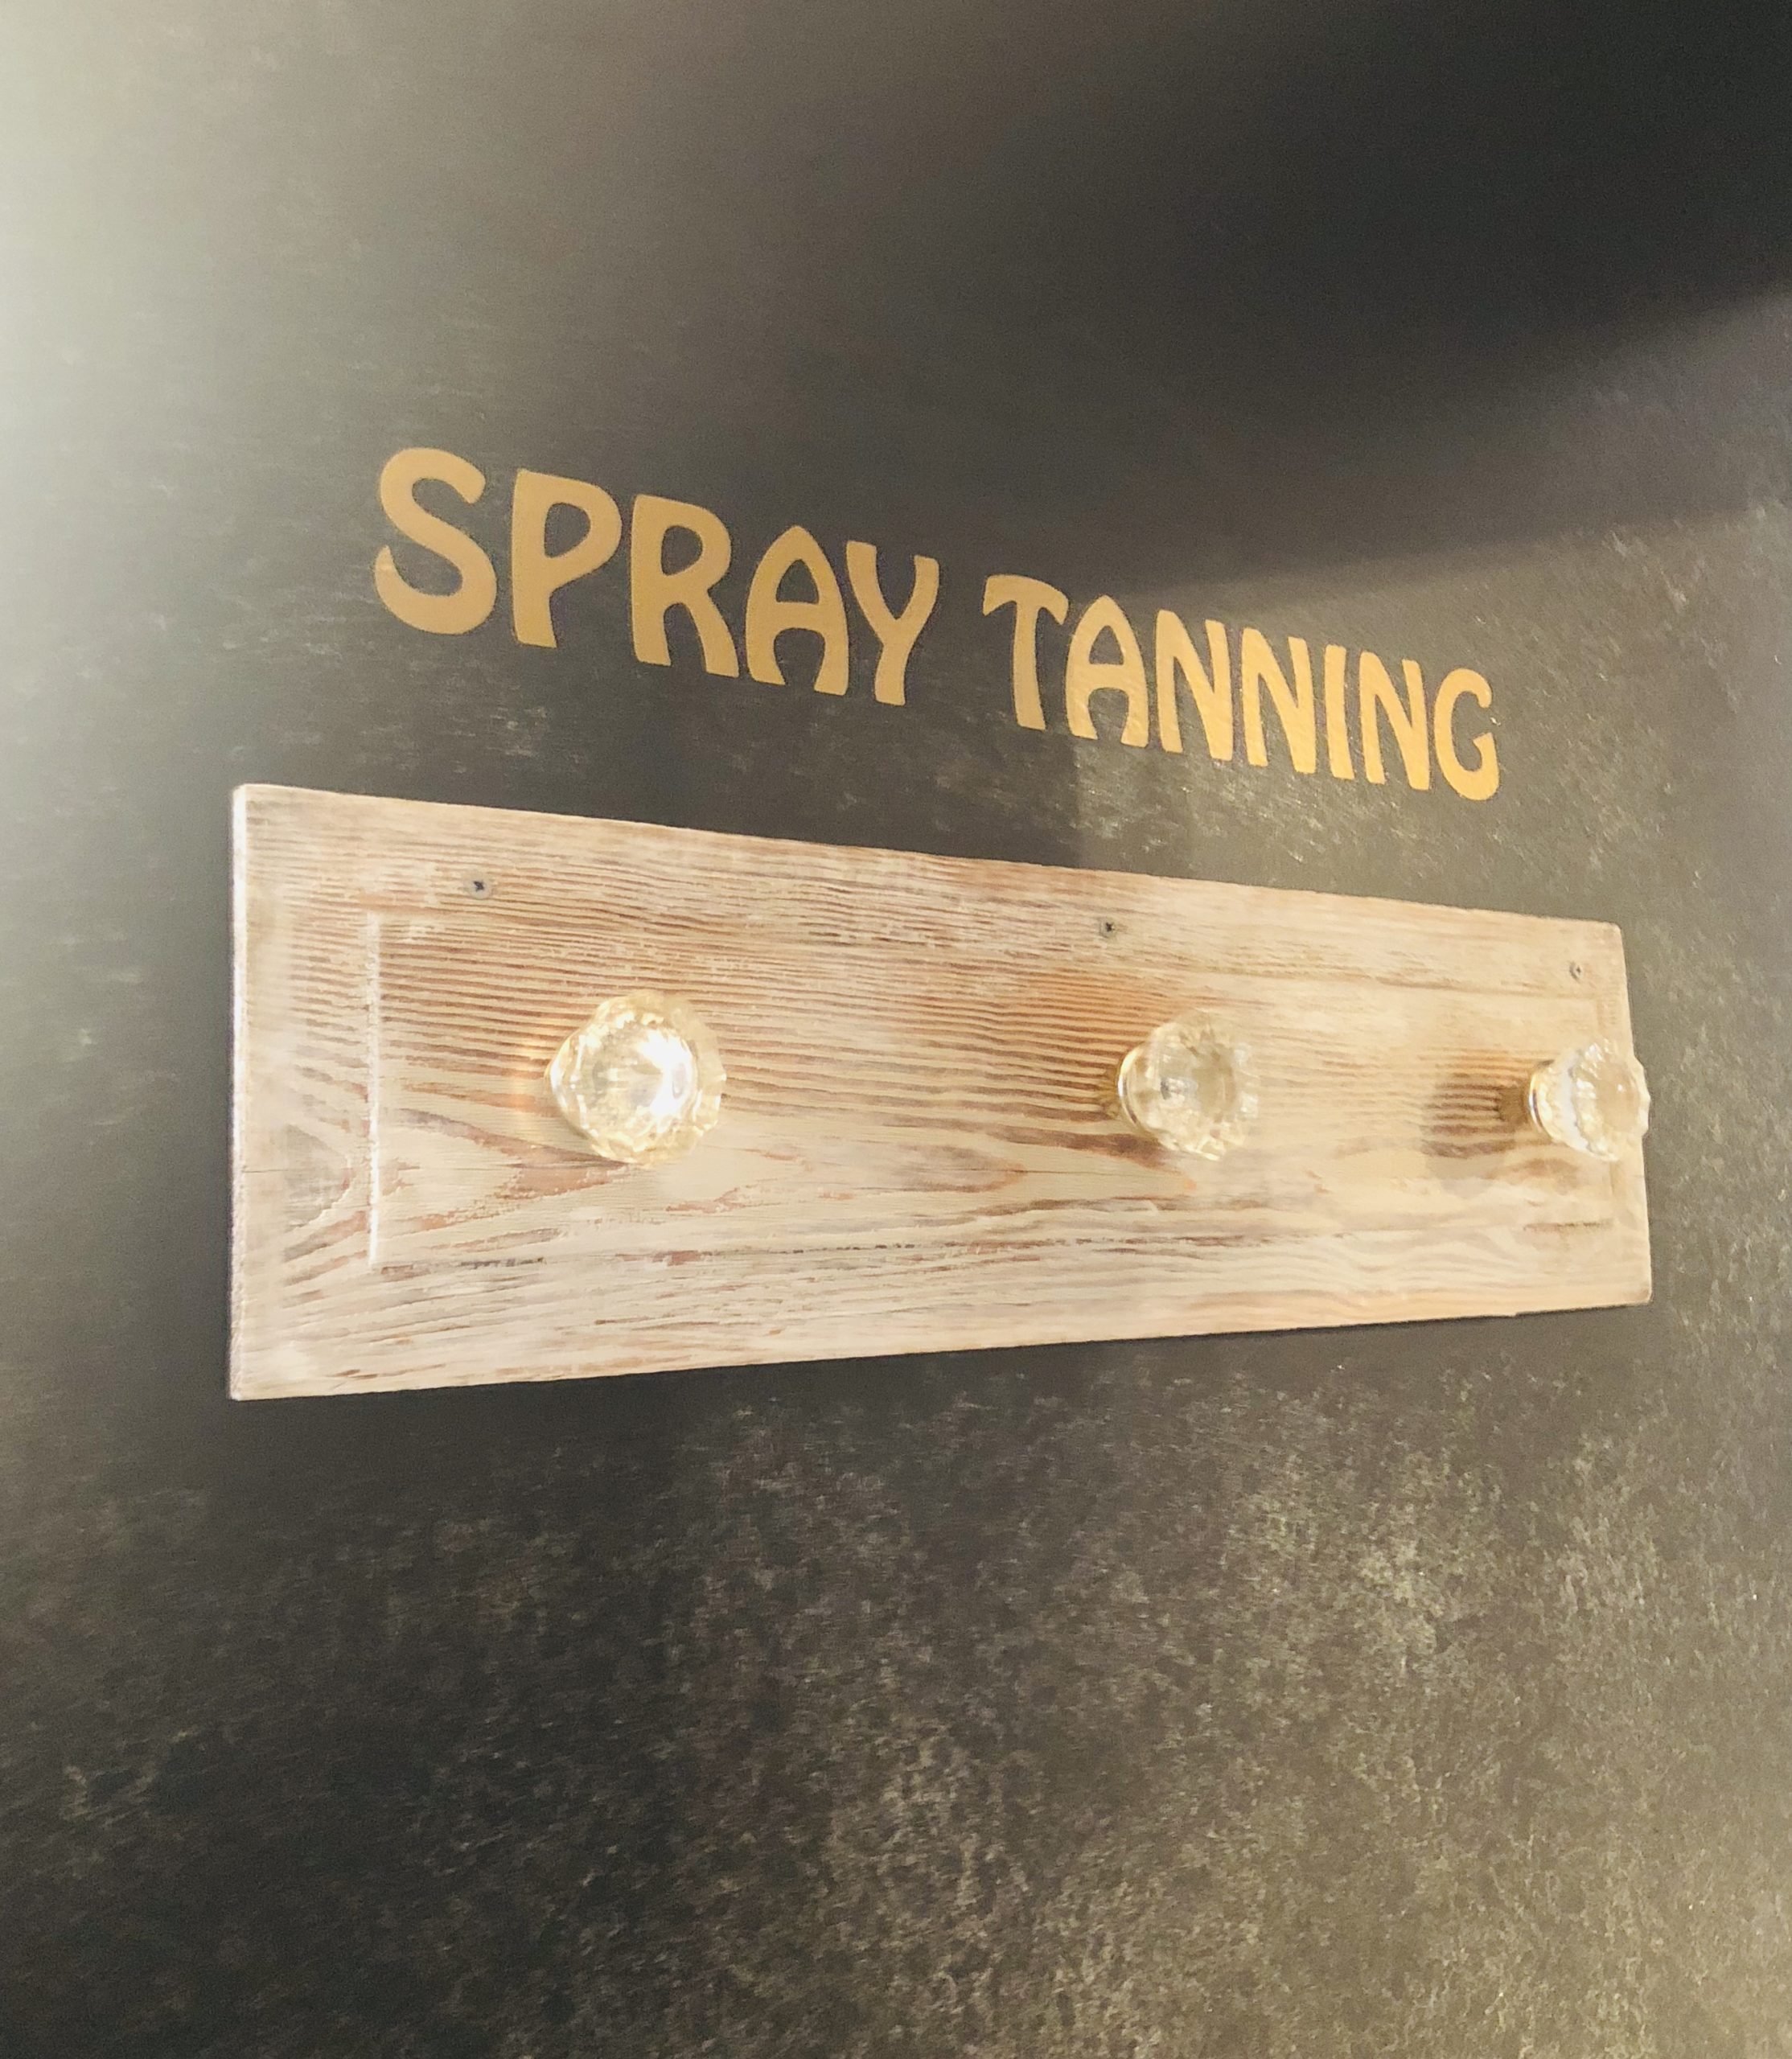 Downtown Raleigh Spray Tan Available at Salon Veritas - Spray Tanning